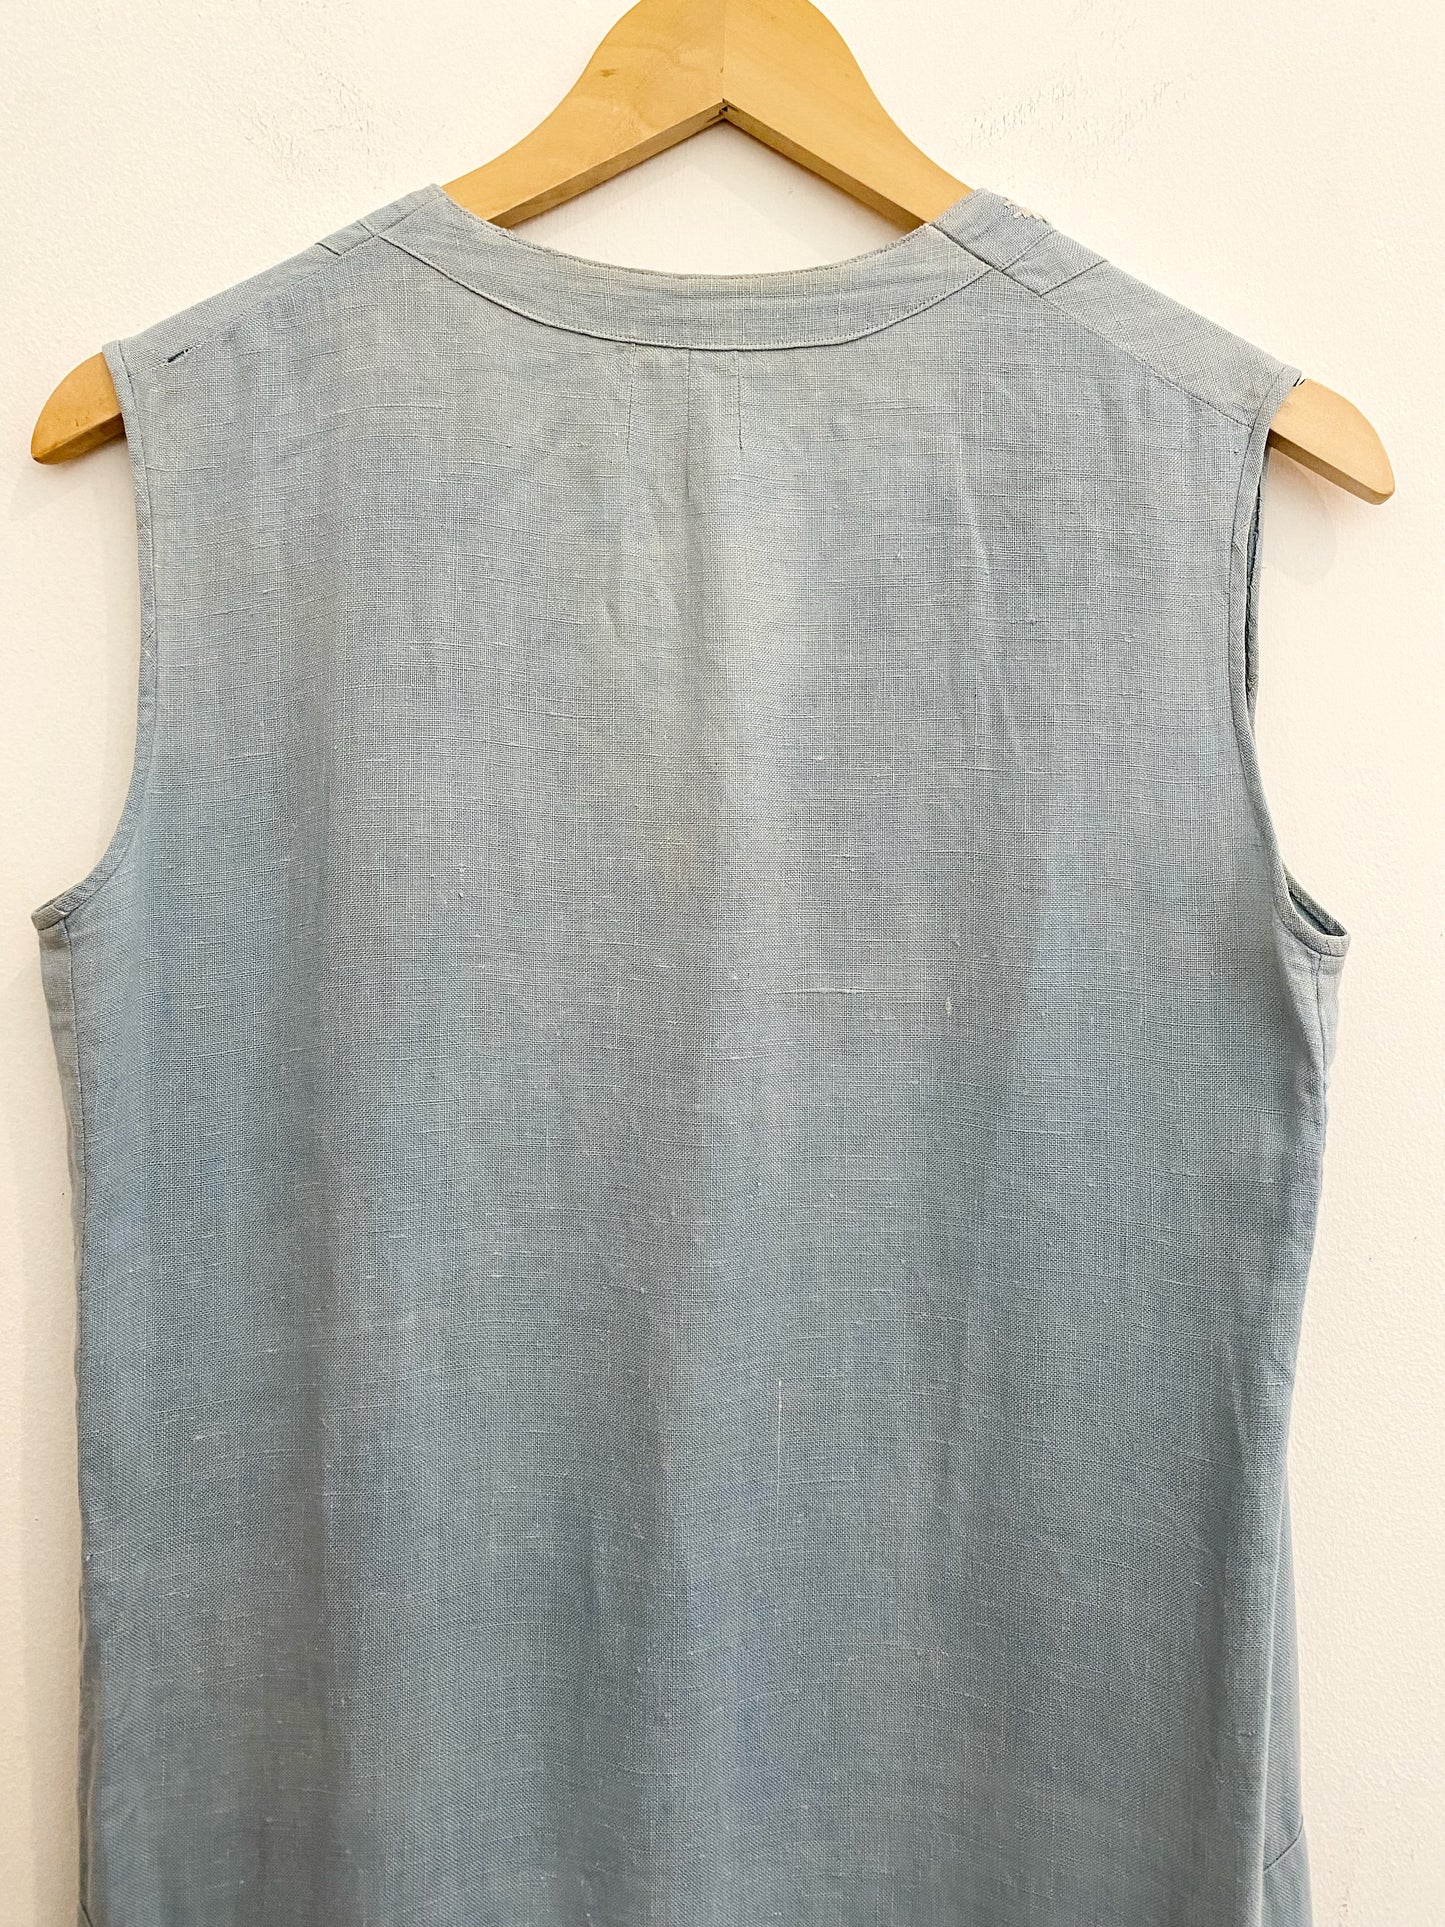 1920s Pale Blue Embroidered Linen Drop Waist Dress- M/L